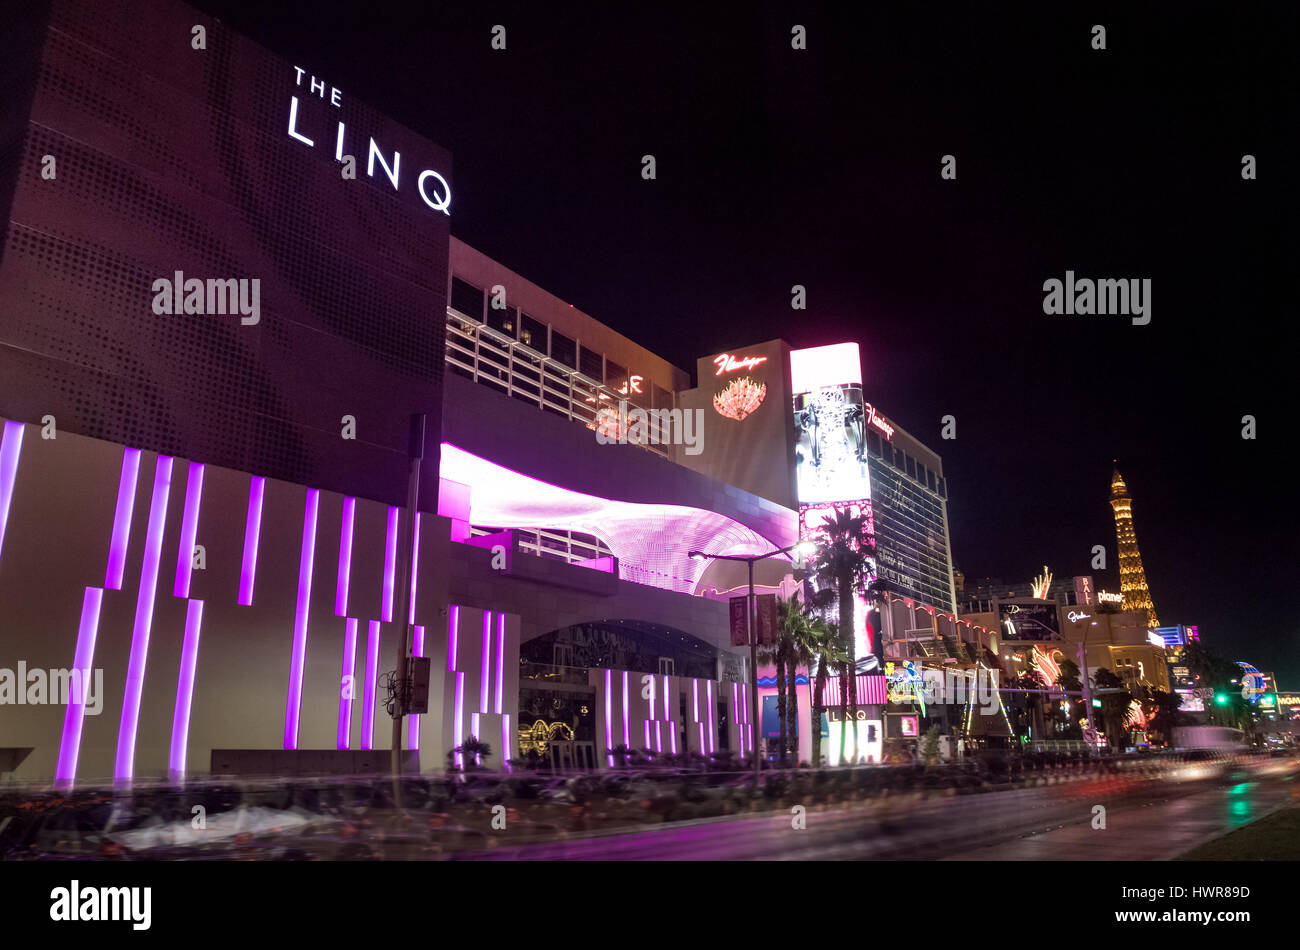 The Linq Hotel and Casino at night - Las Vegas, Nevada, USA Stock Photo